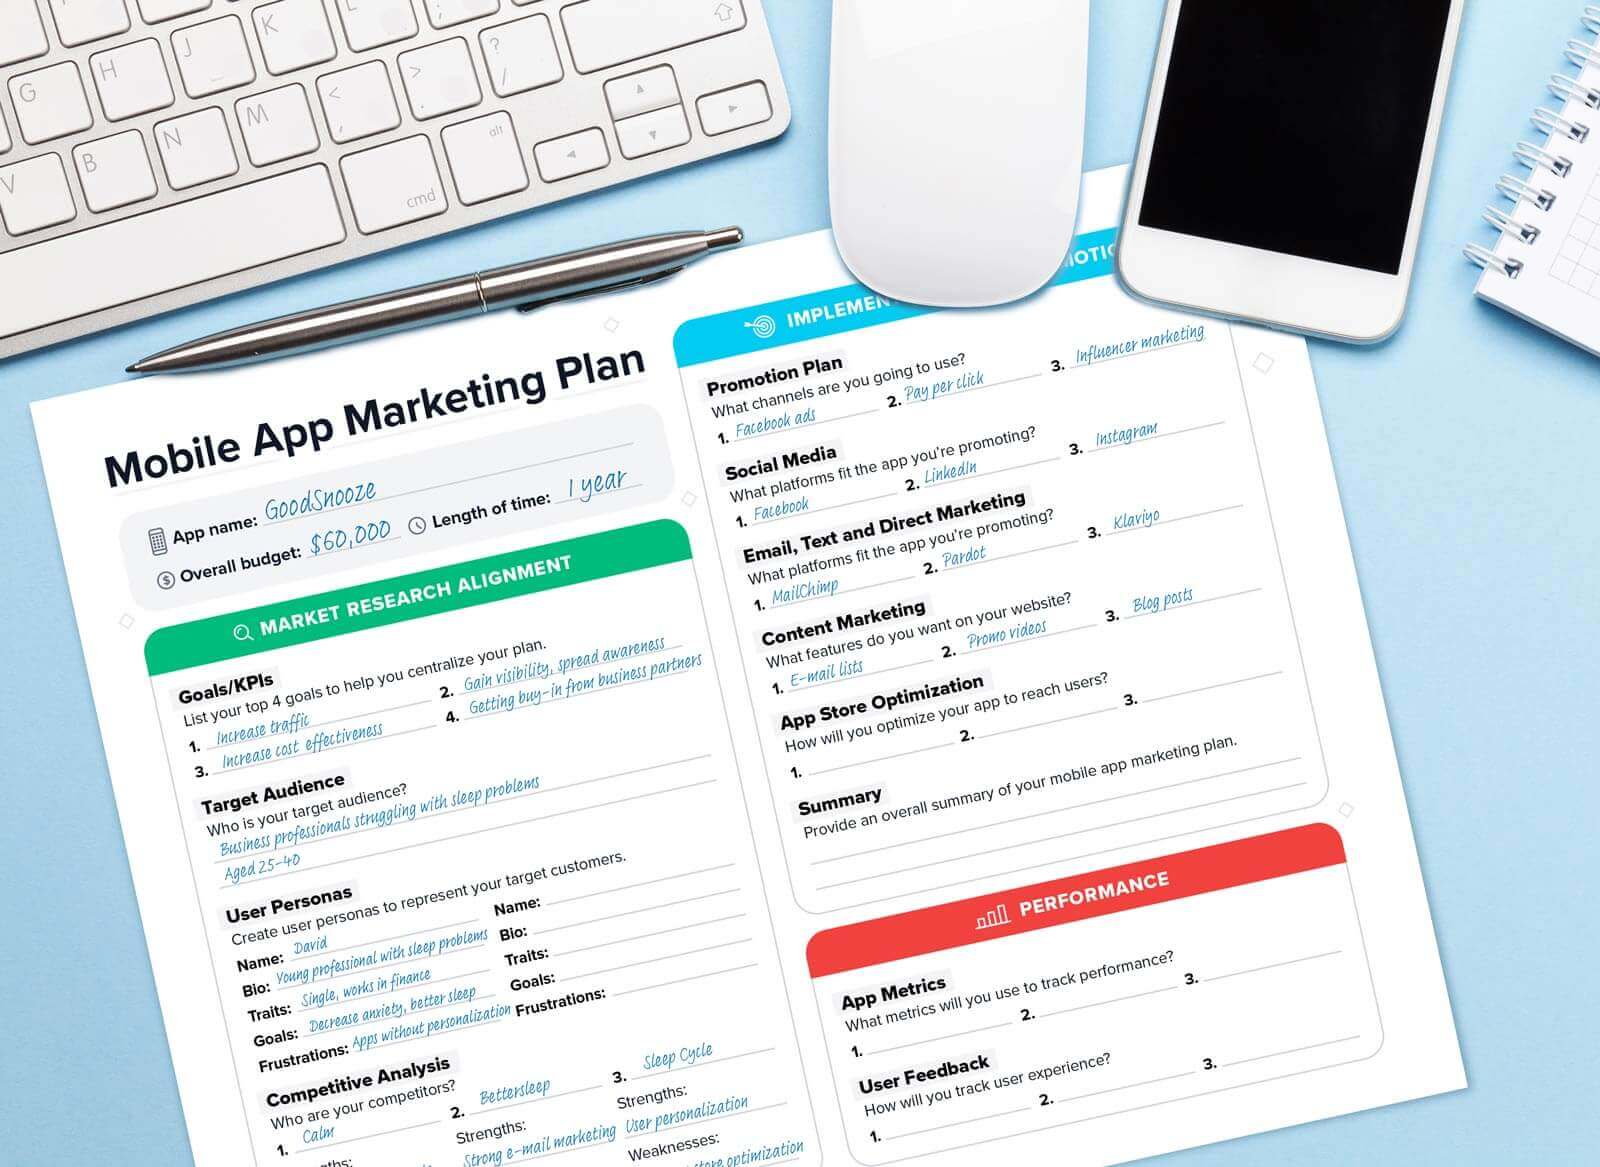 Mobile App Marketing Template - download PDF